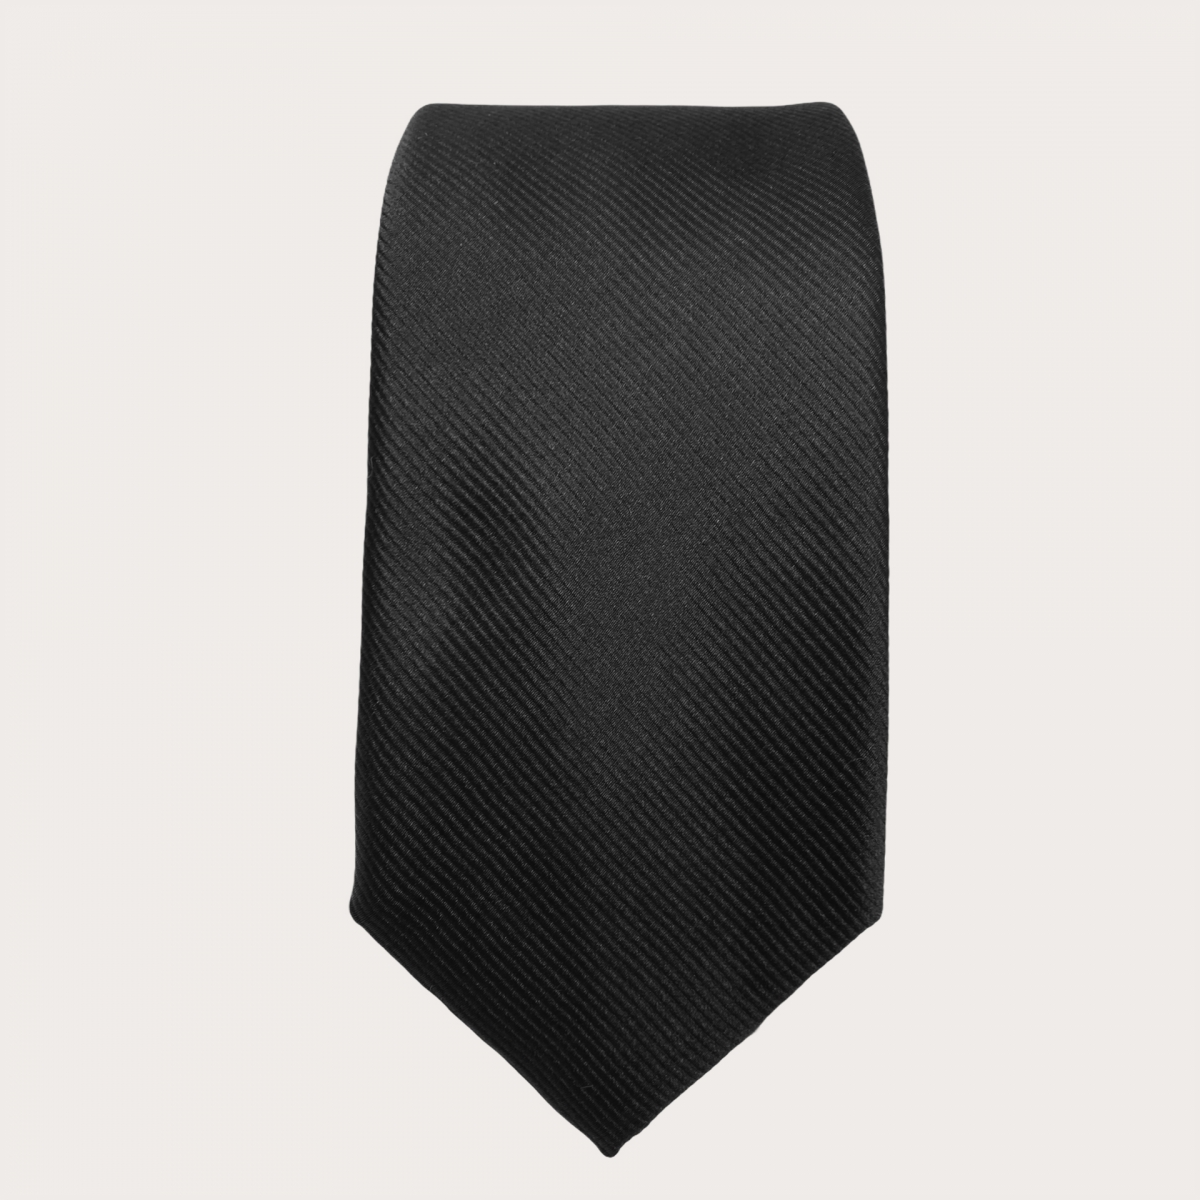 BRUCLE Classic necktie in pure silk, black